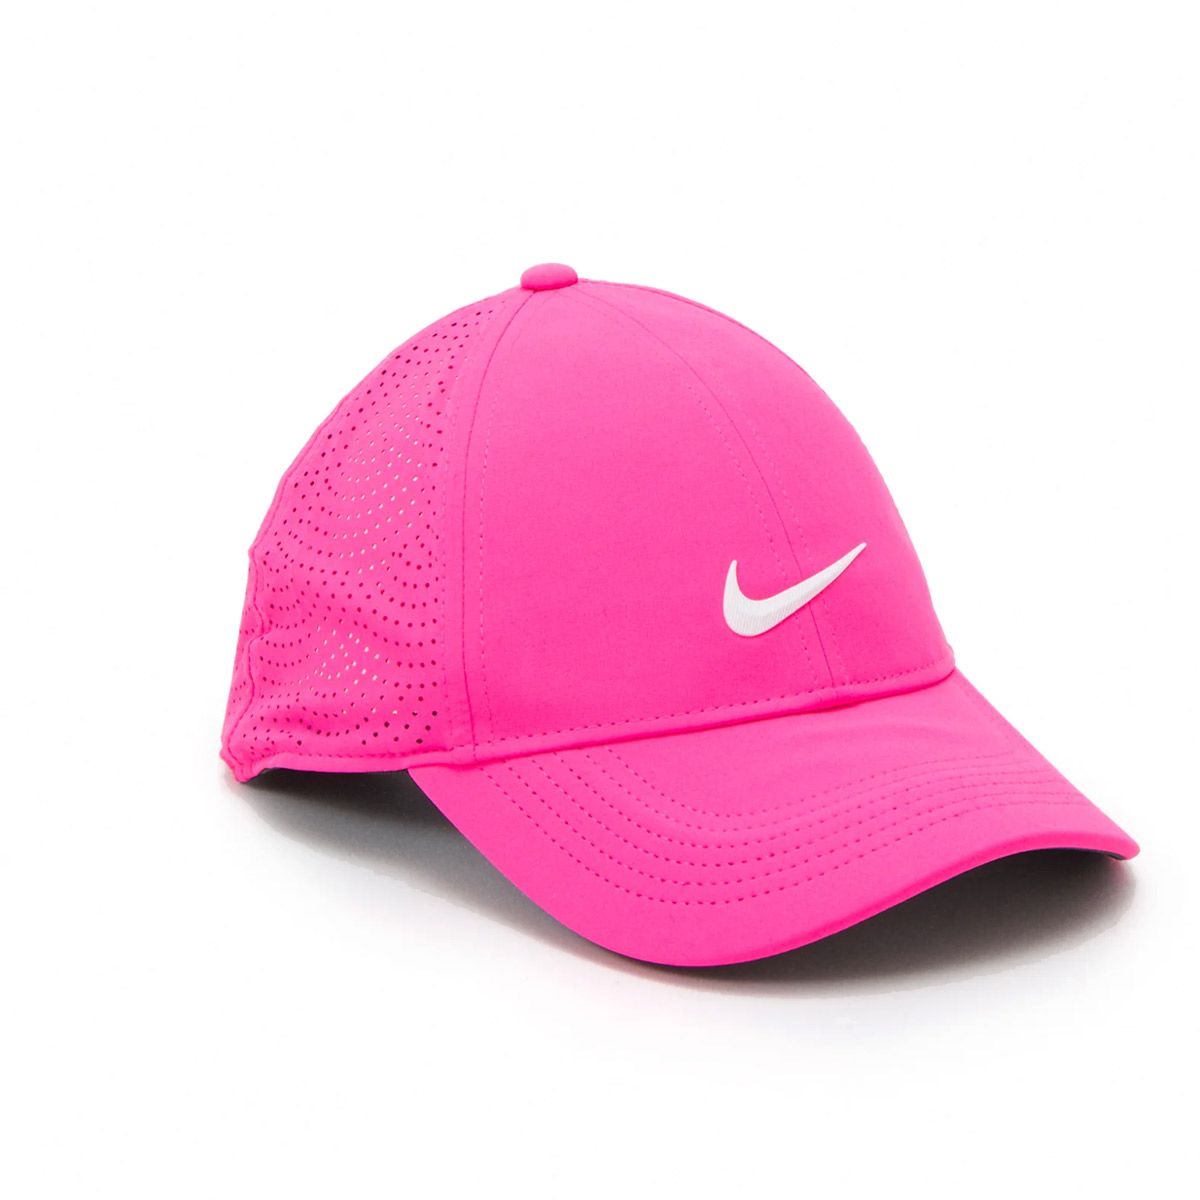 Nike cap.